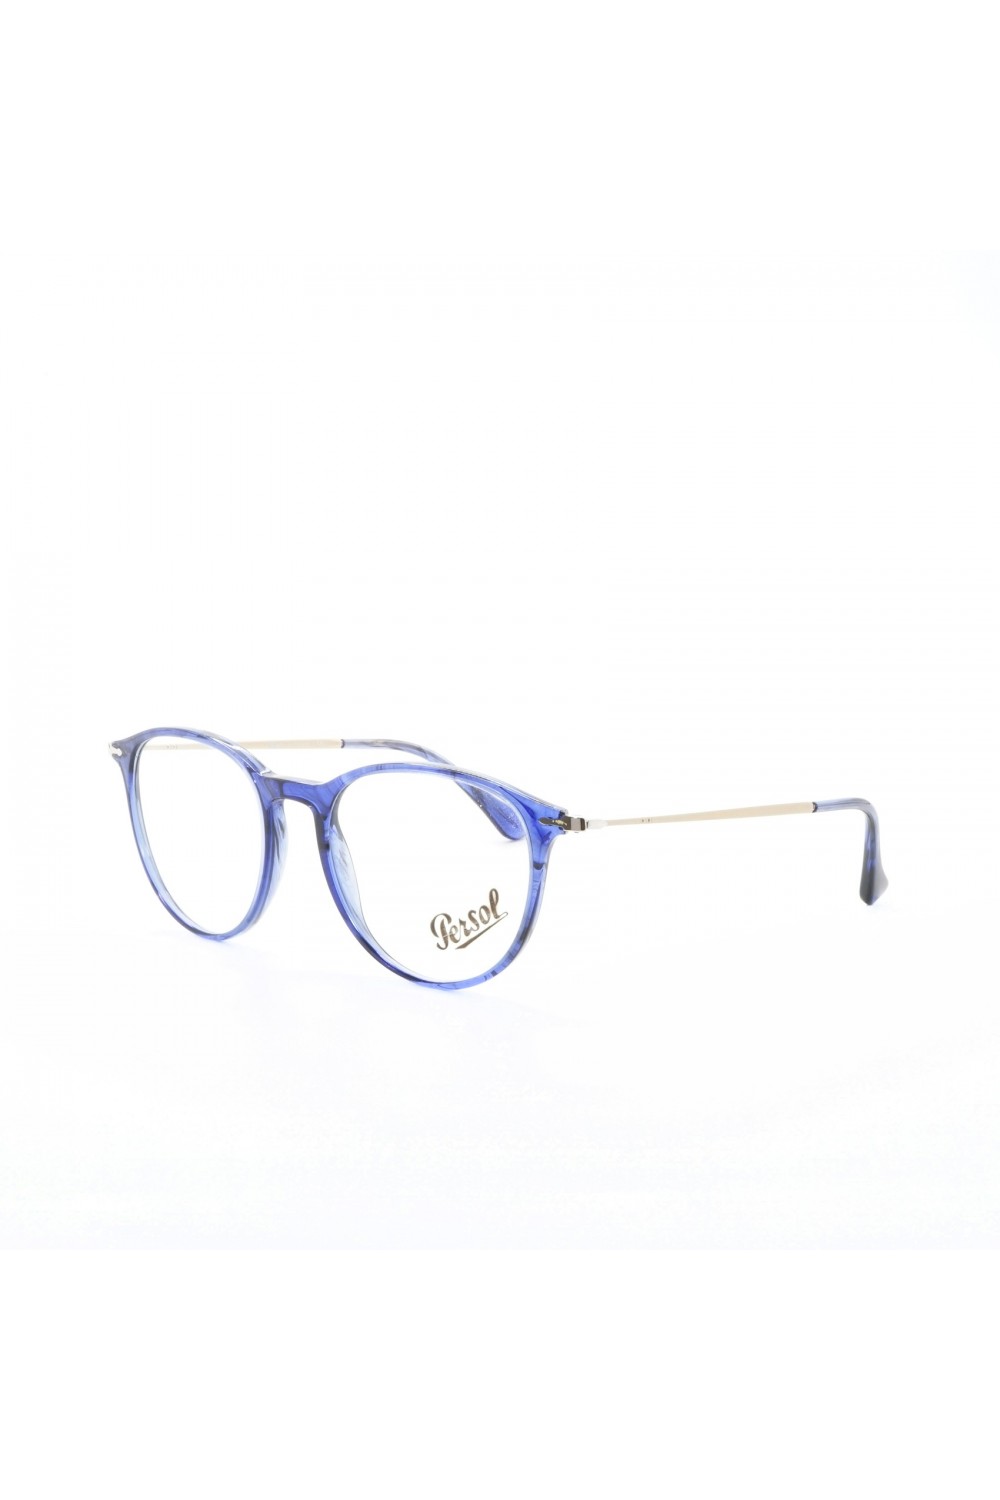 Persol - Occhiali da vista in celluloide tondi unisex blu tartarugato - 3147